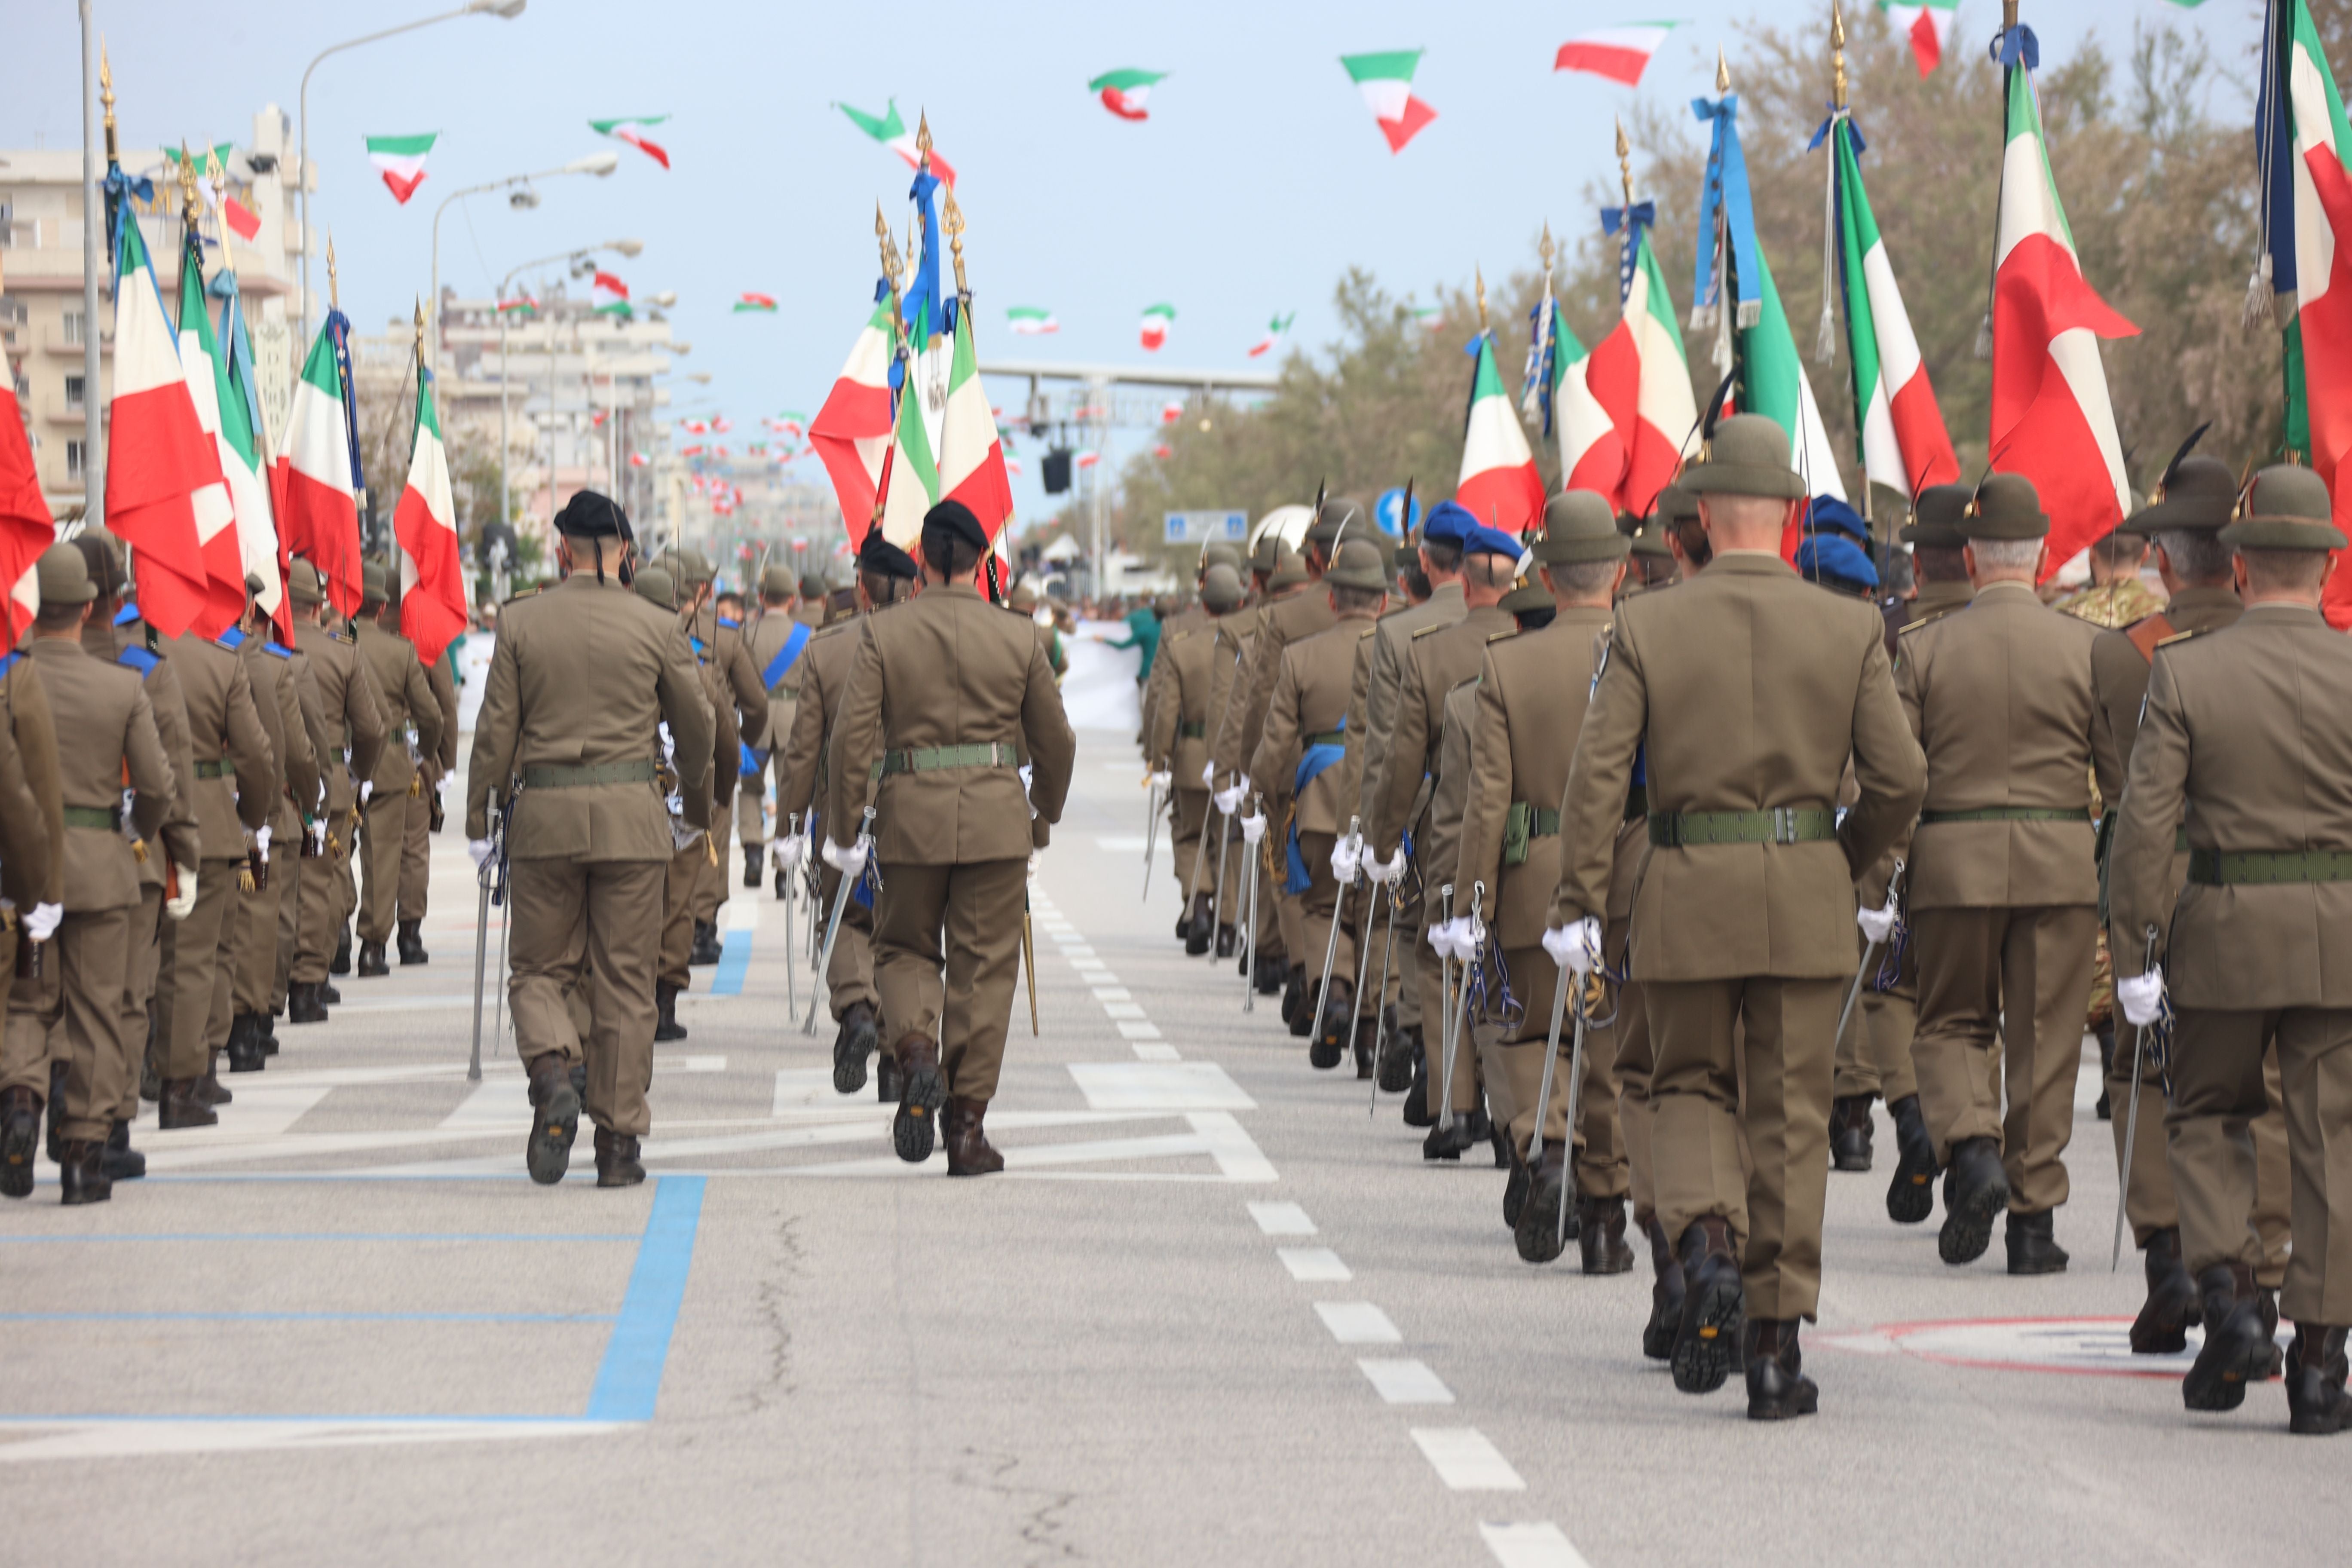 Veterans march at this year’s Alpini gathering in Rimini